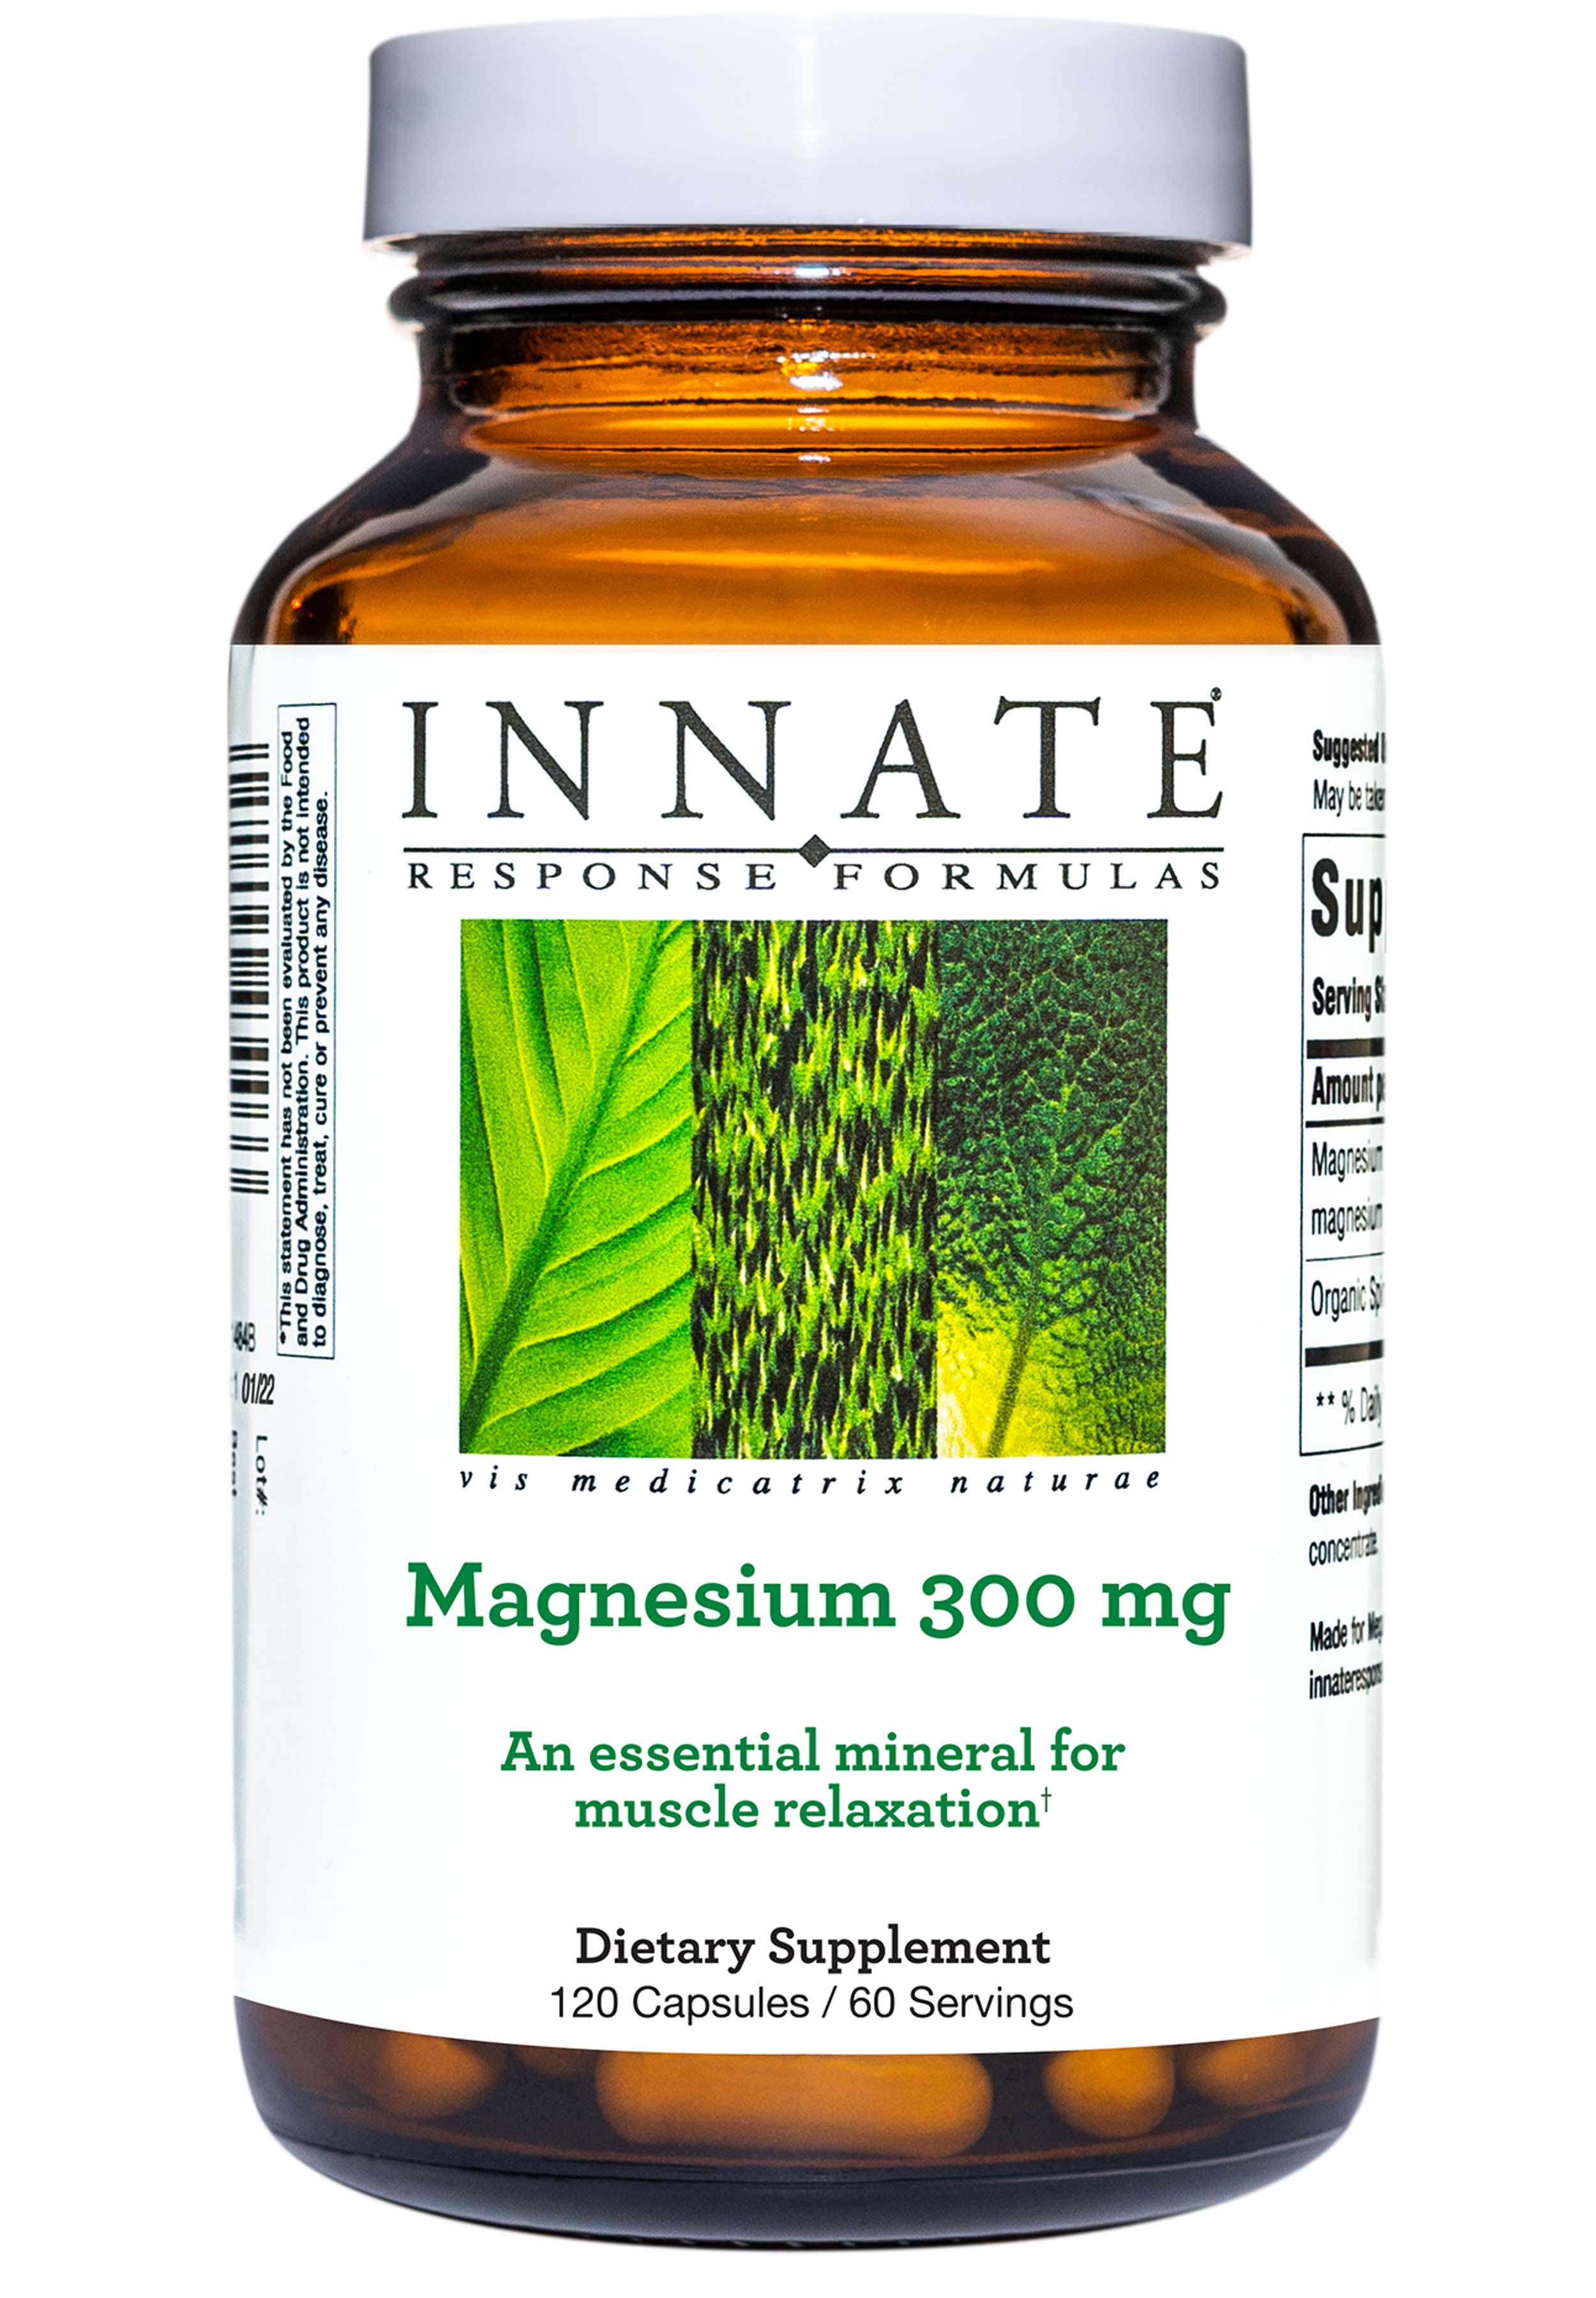 Innate Response Formulas Magnesium 300 mg